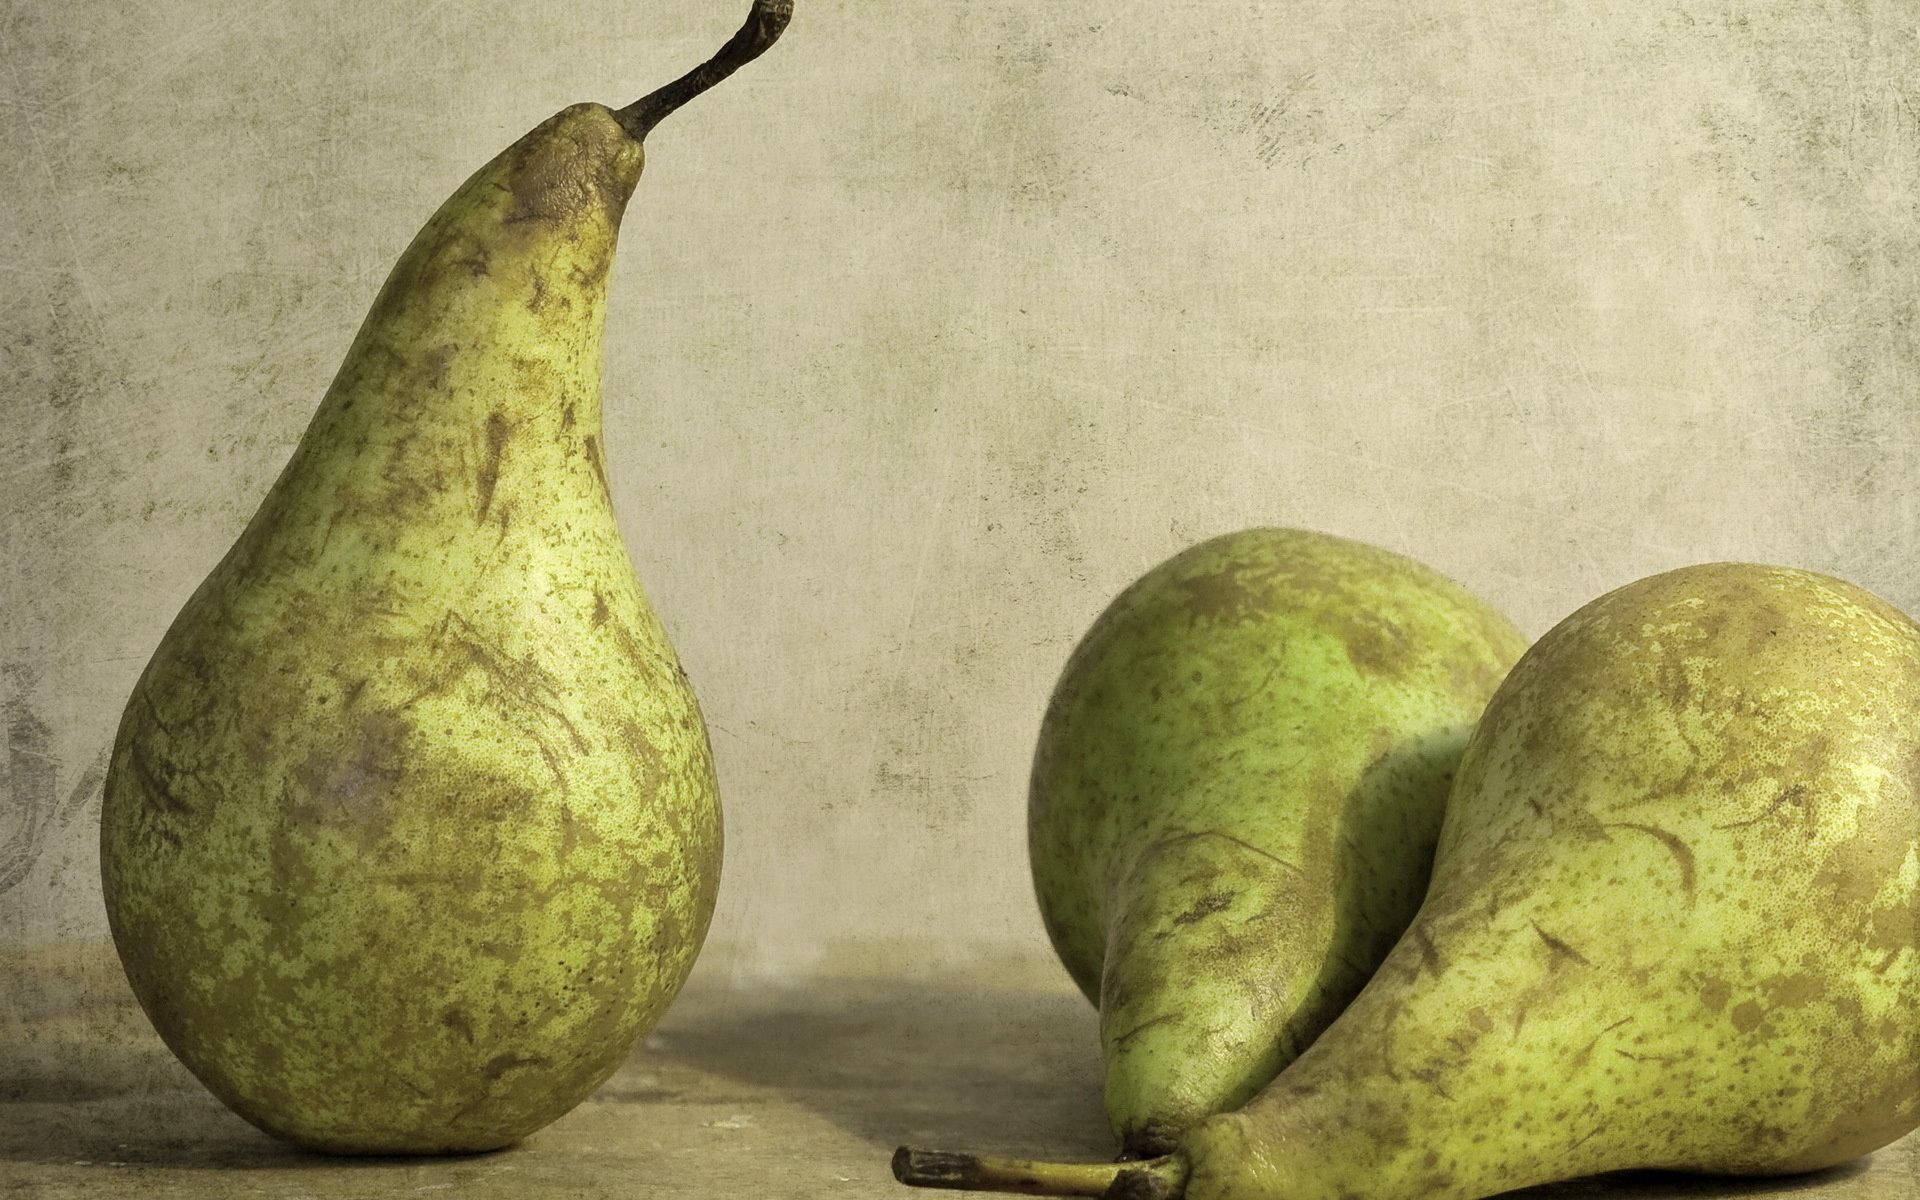 Fresh Food Green Pears Wallpaper